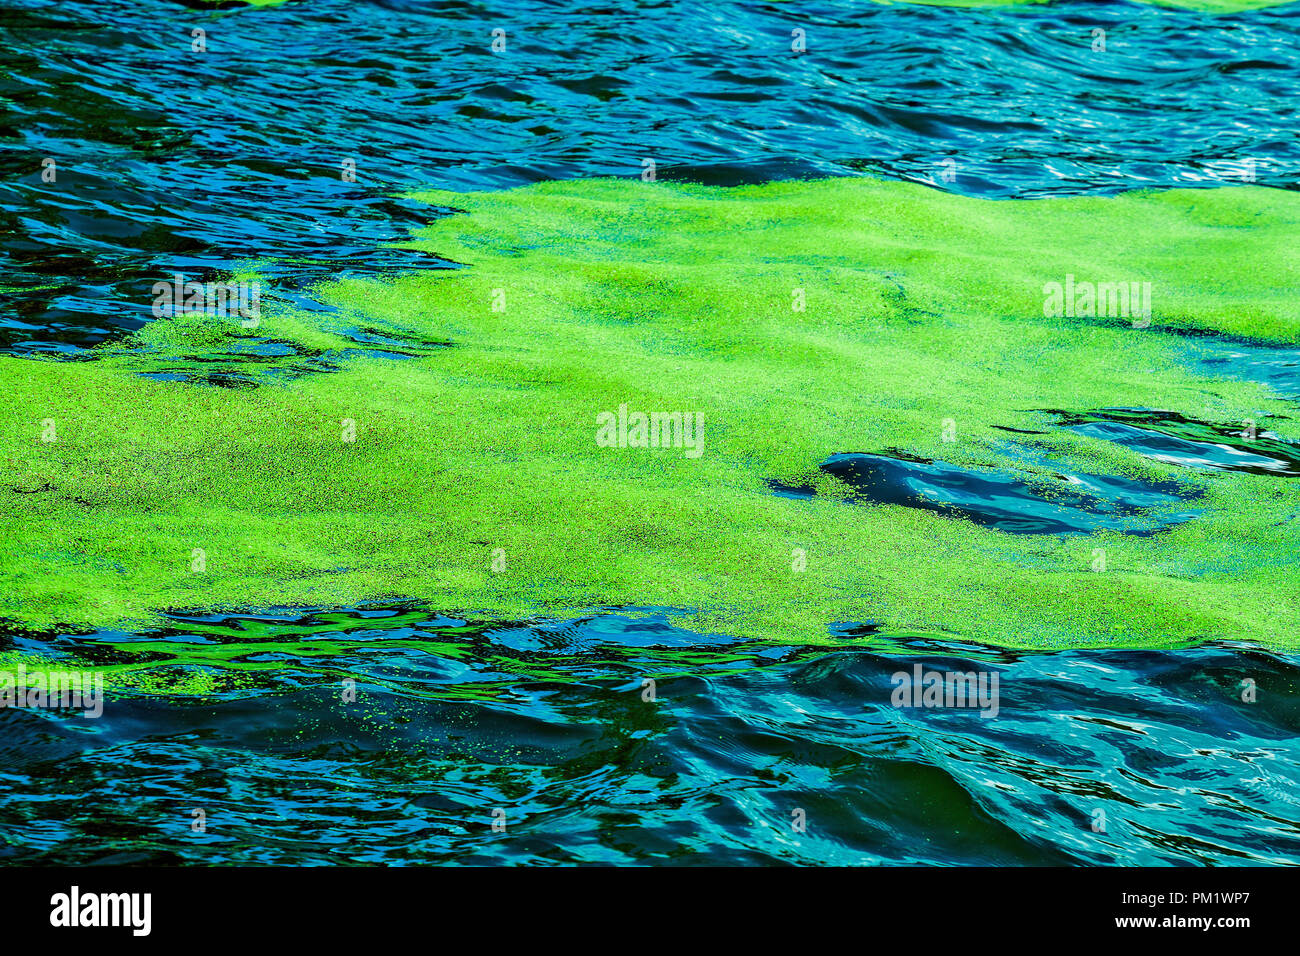 green duckweed floating on Lake Michigan water surface Stock Photo